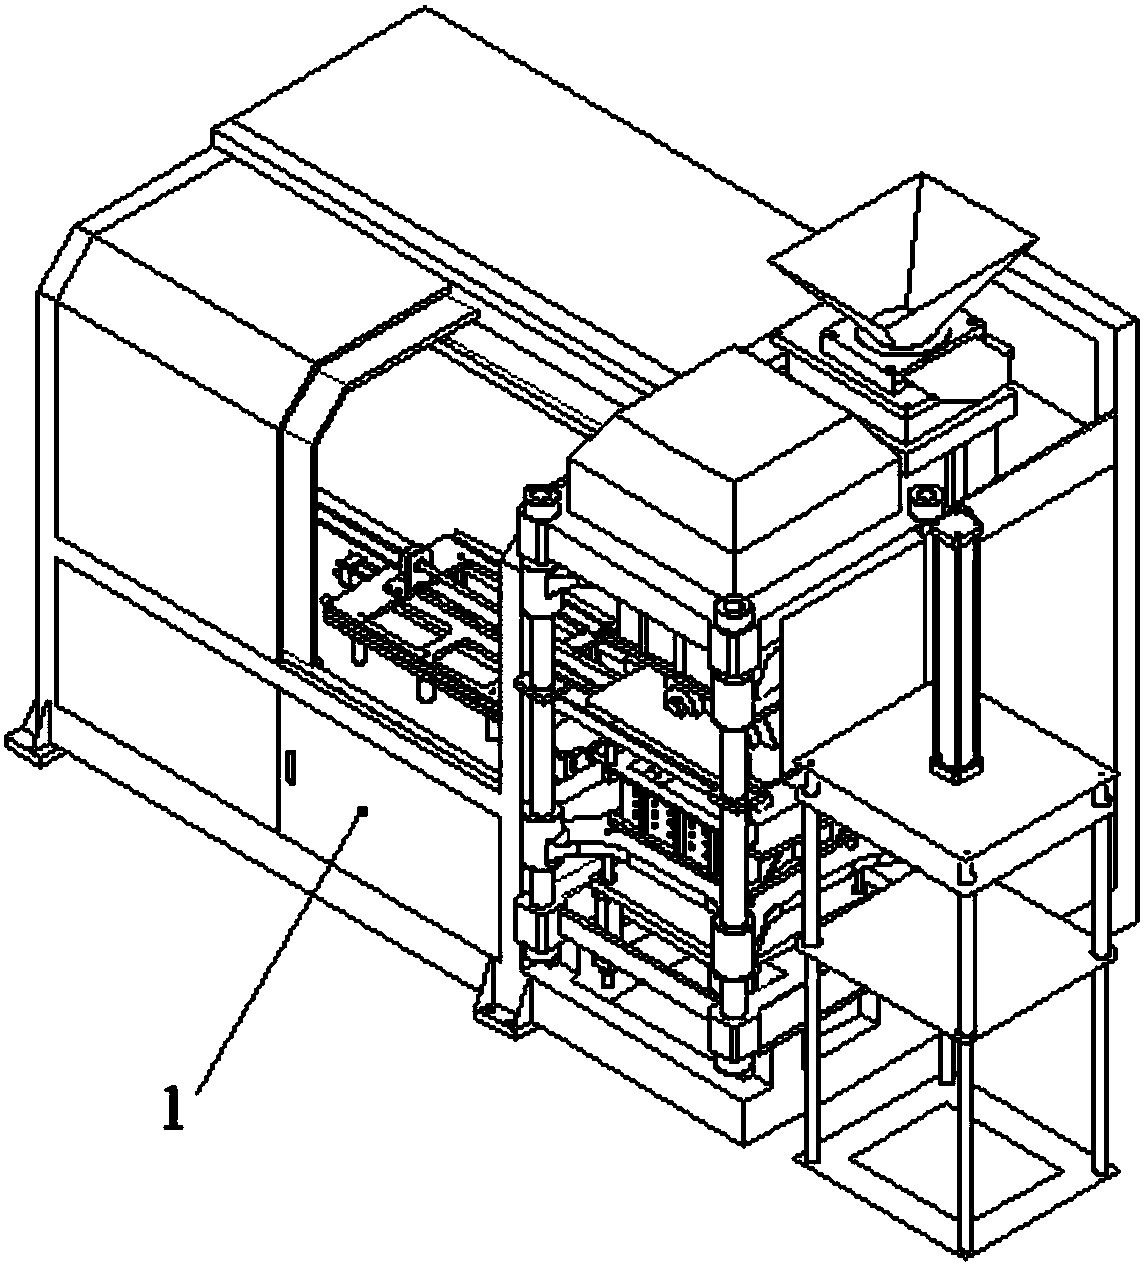 A lower sand box of a horizontal boxless molding machine